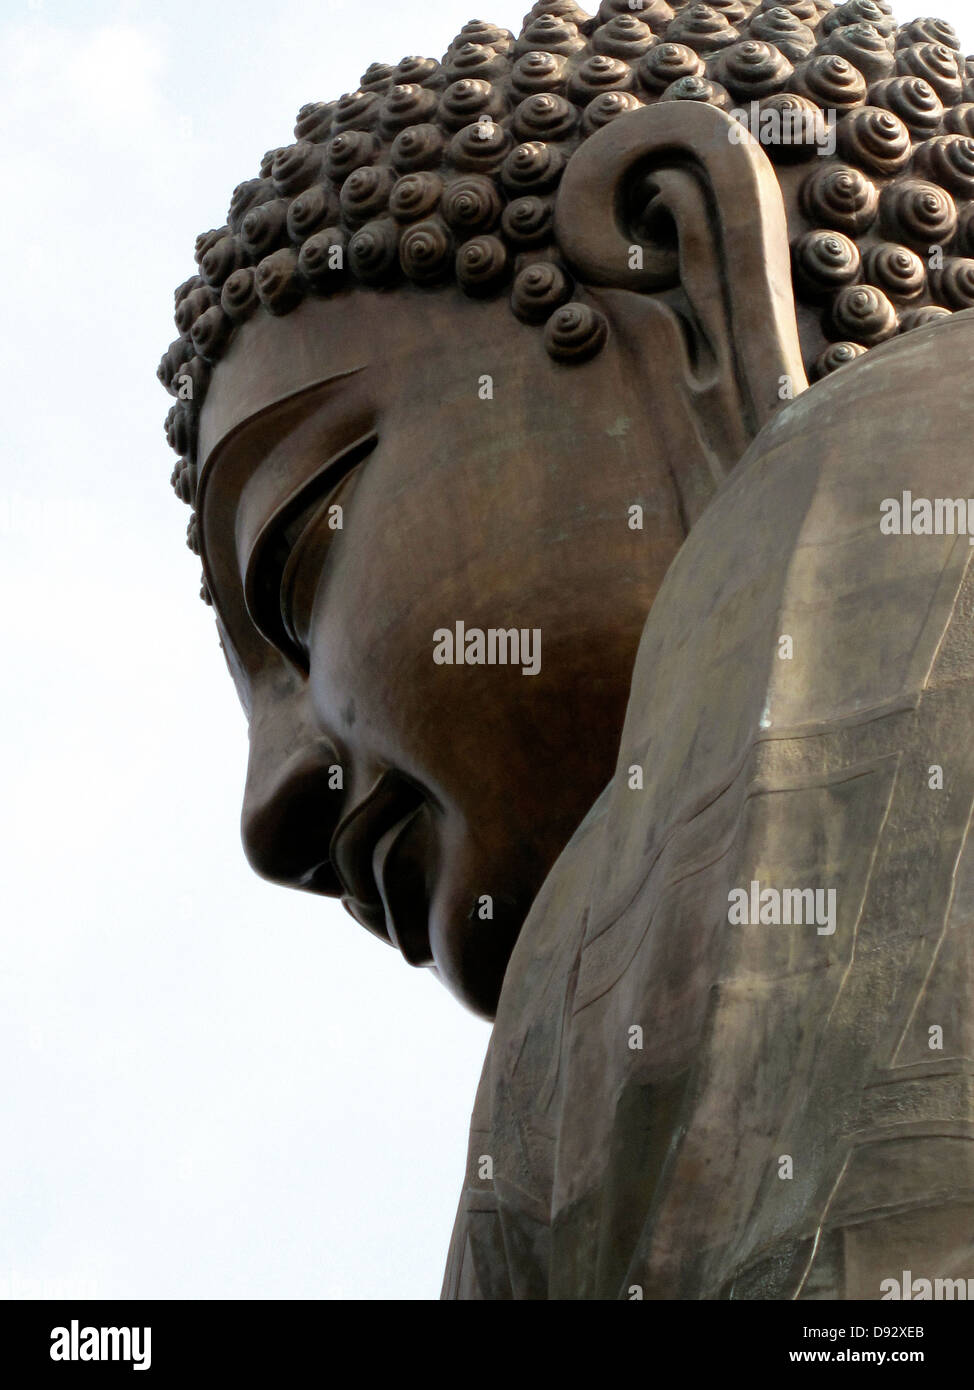 The Big Buddha statue in the Po Lin Monastery, Lantau Island, Hong Kong Stock Photo